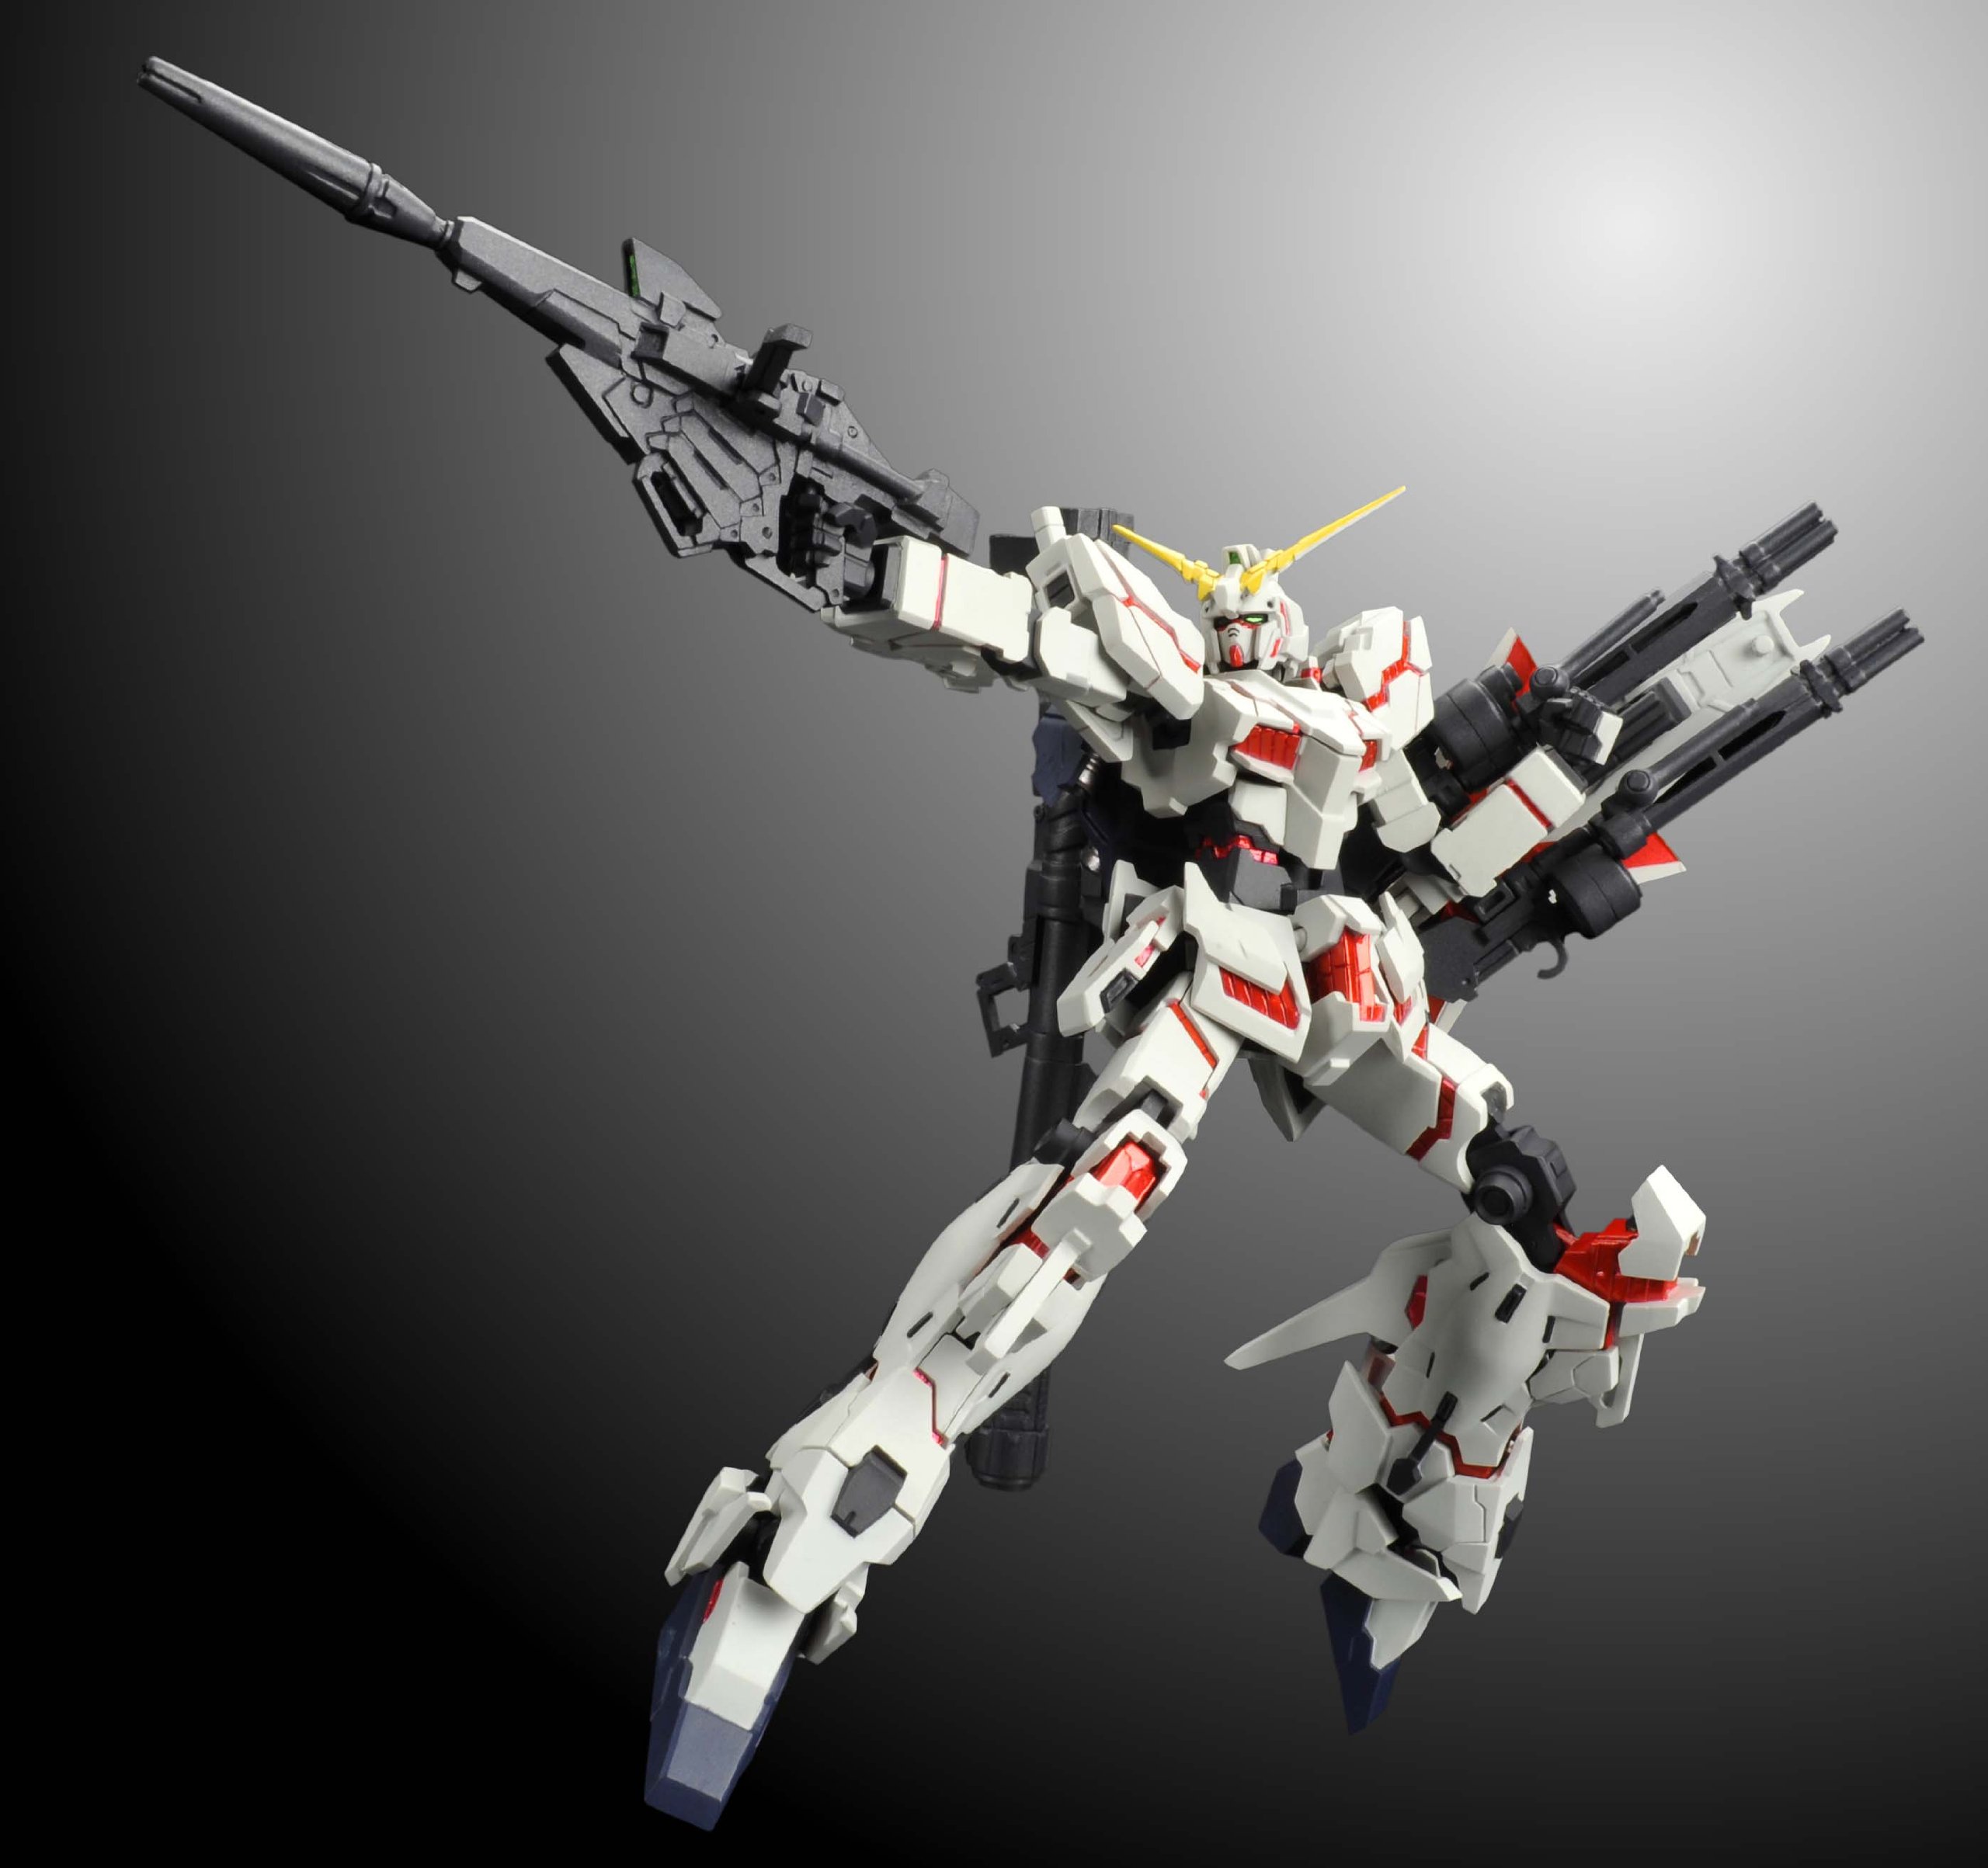  MS Unicorn Gundam Destroy Mode Full Action Ver Wallpaper Size Images